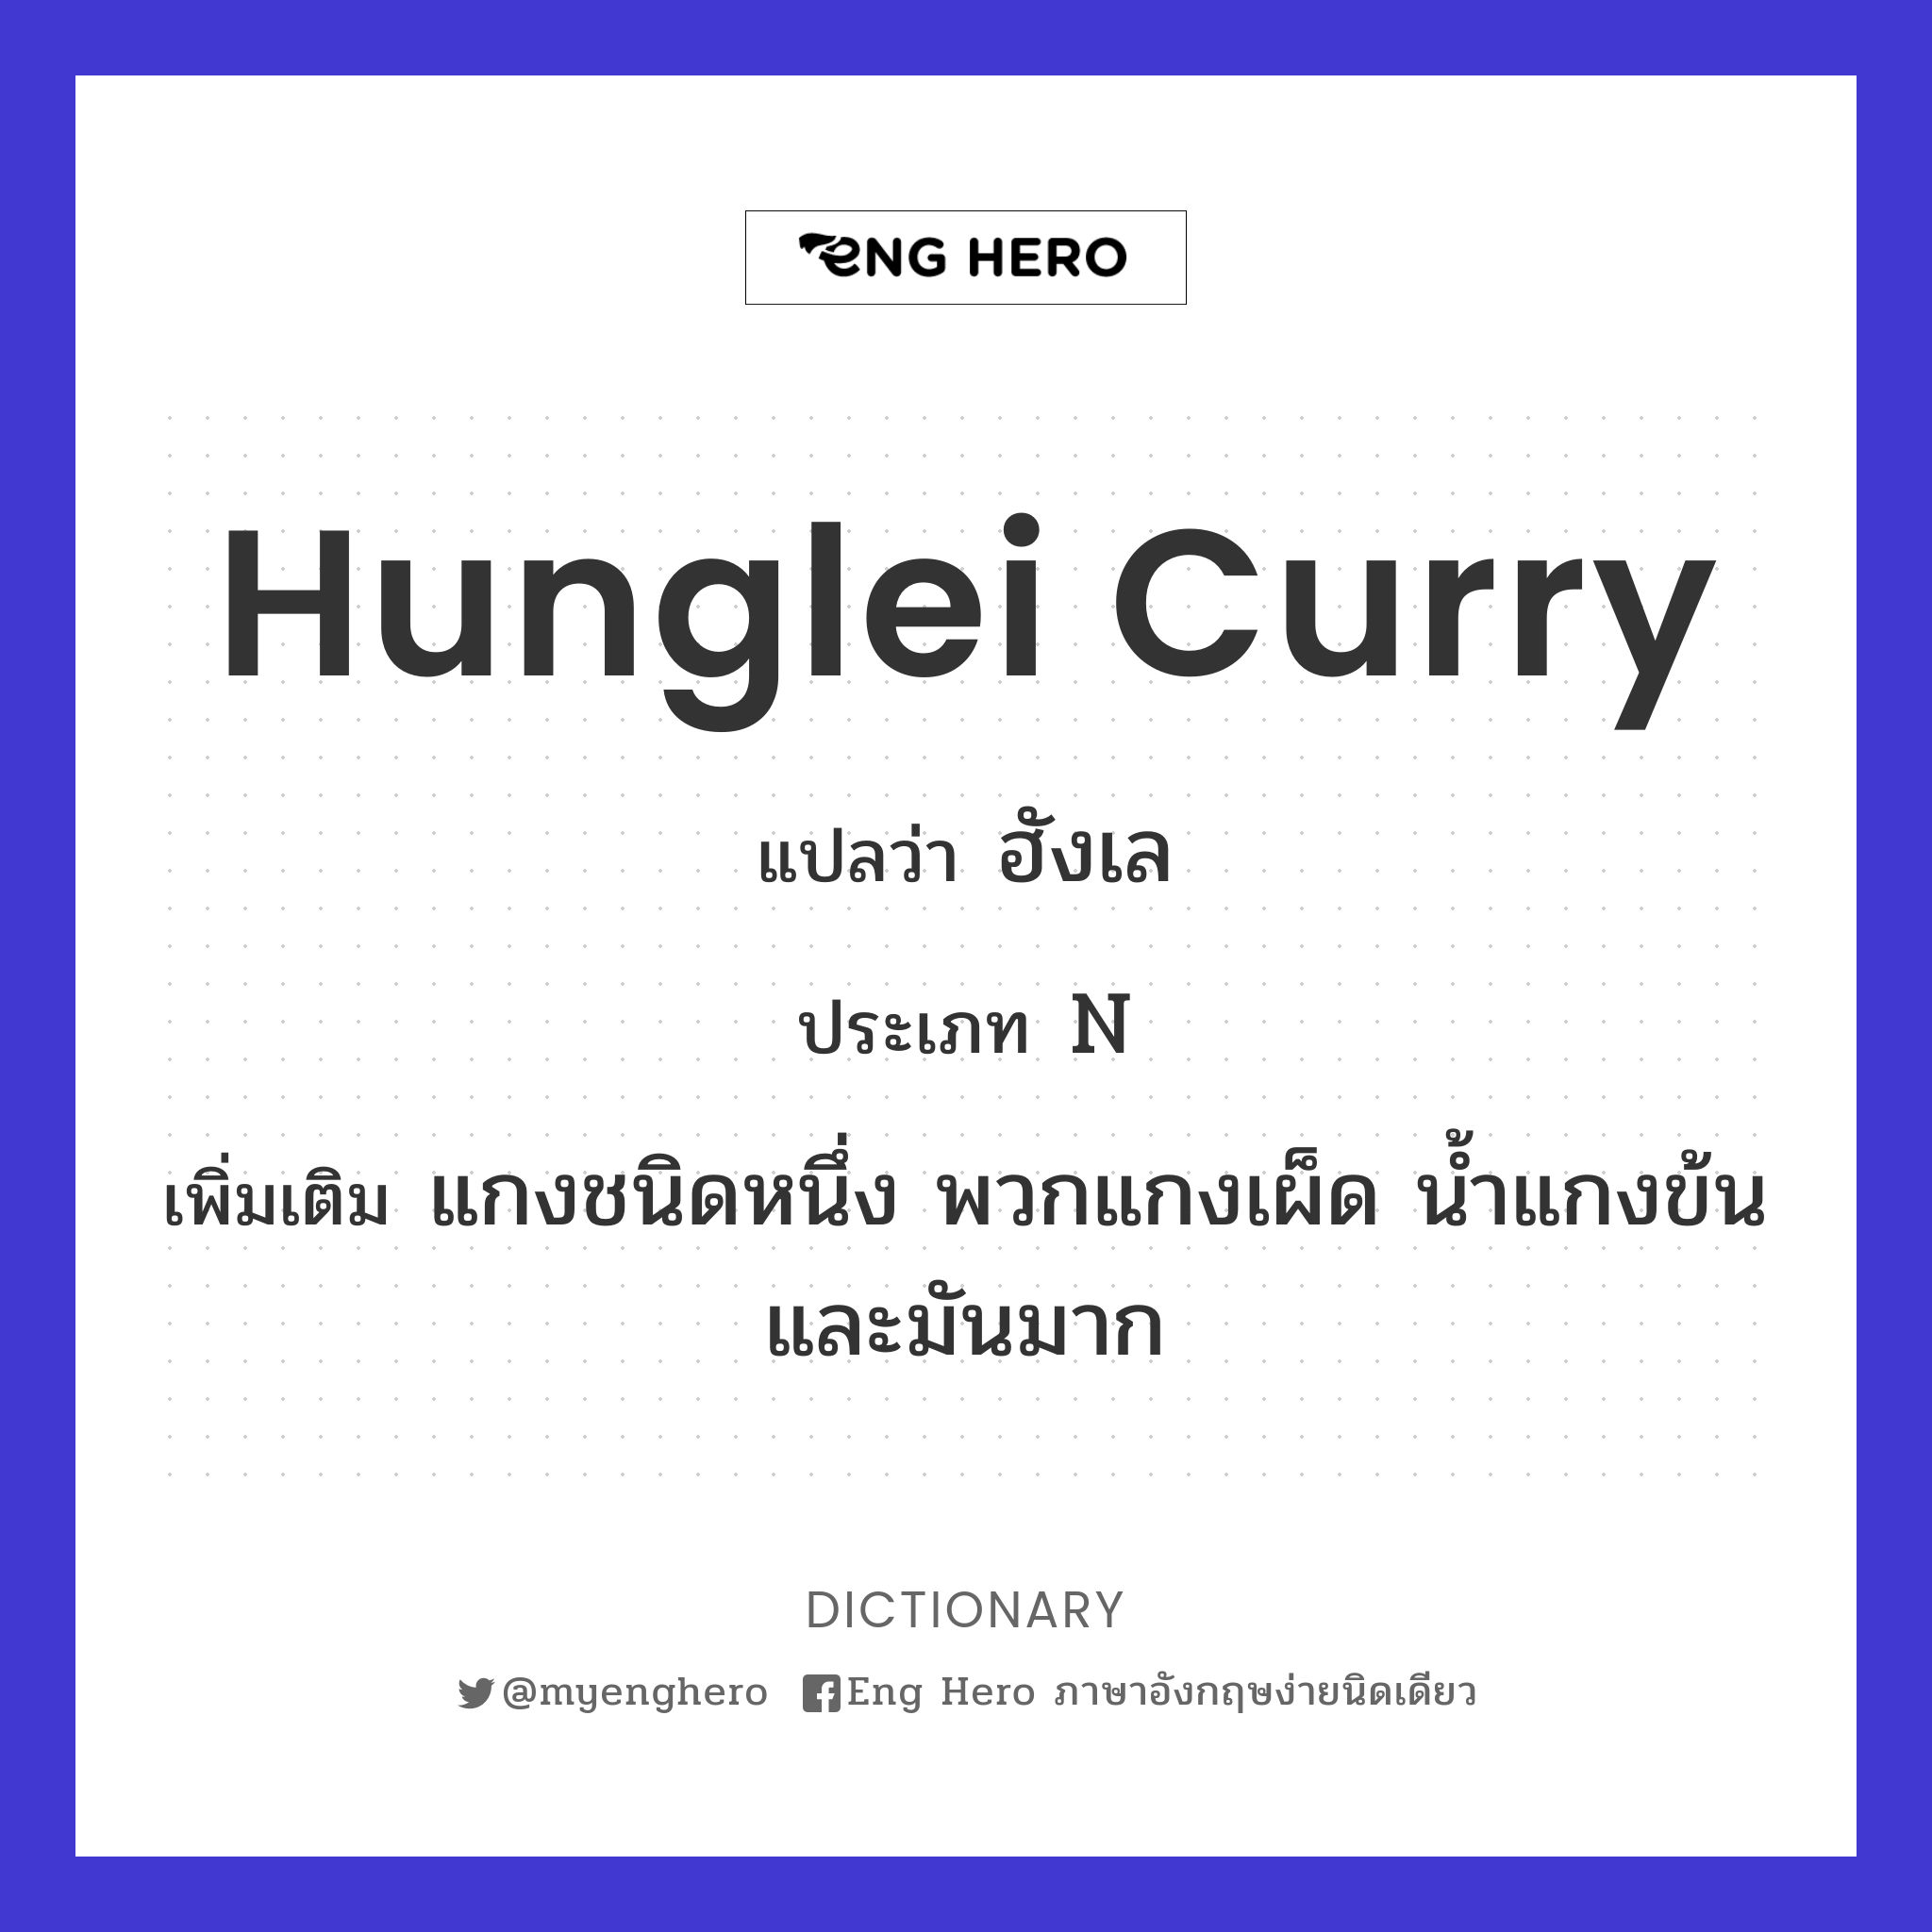 Hunglei curry